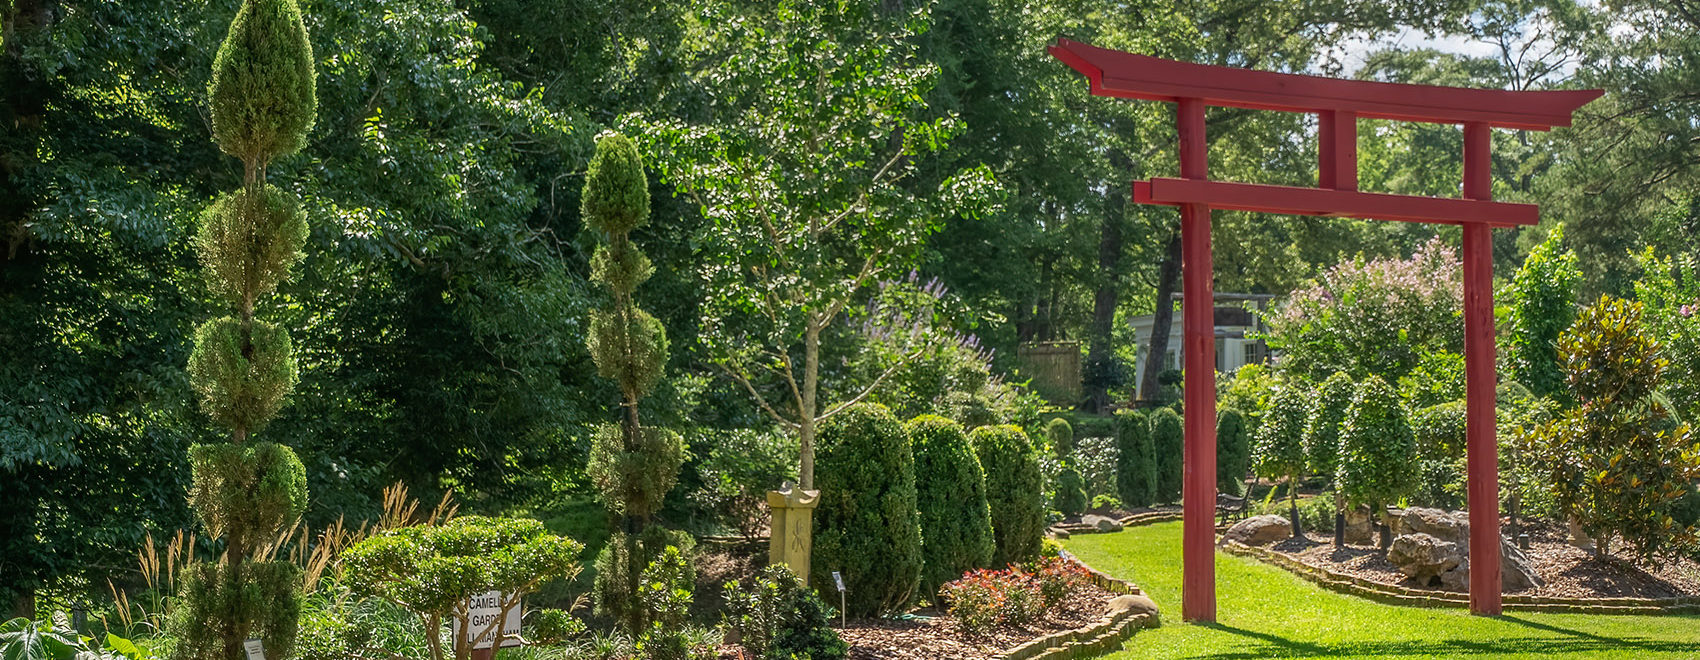 Red Japanese torri gate in garden in St. Francisville Louisiana